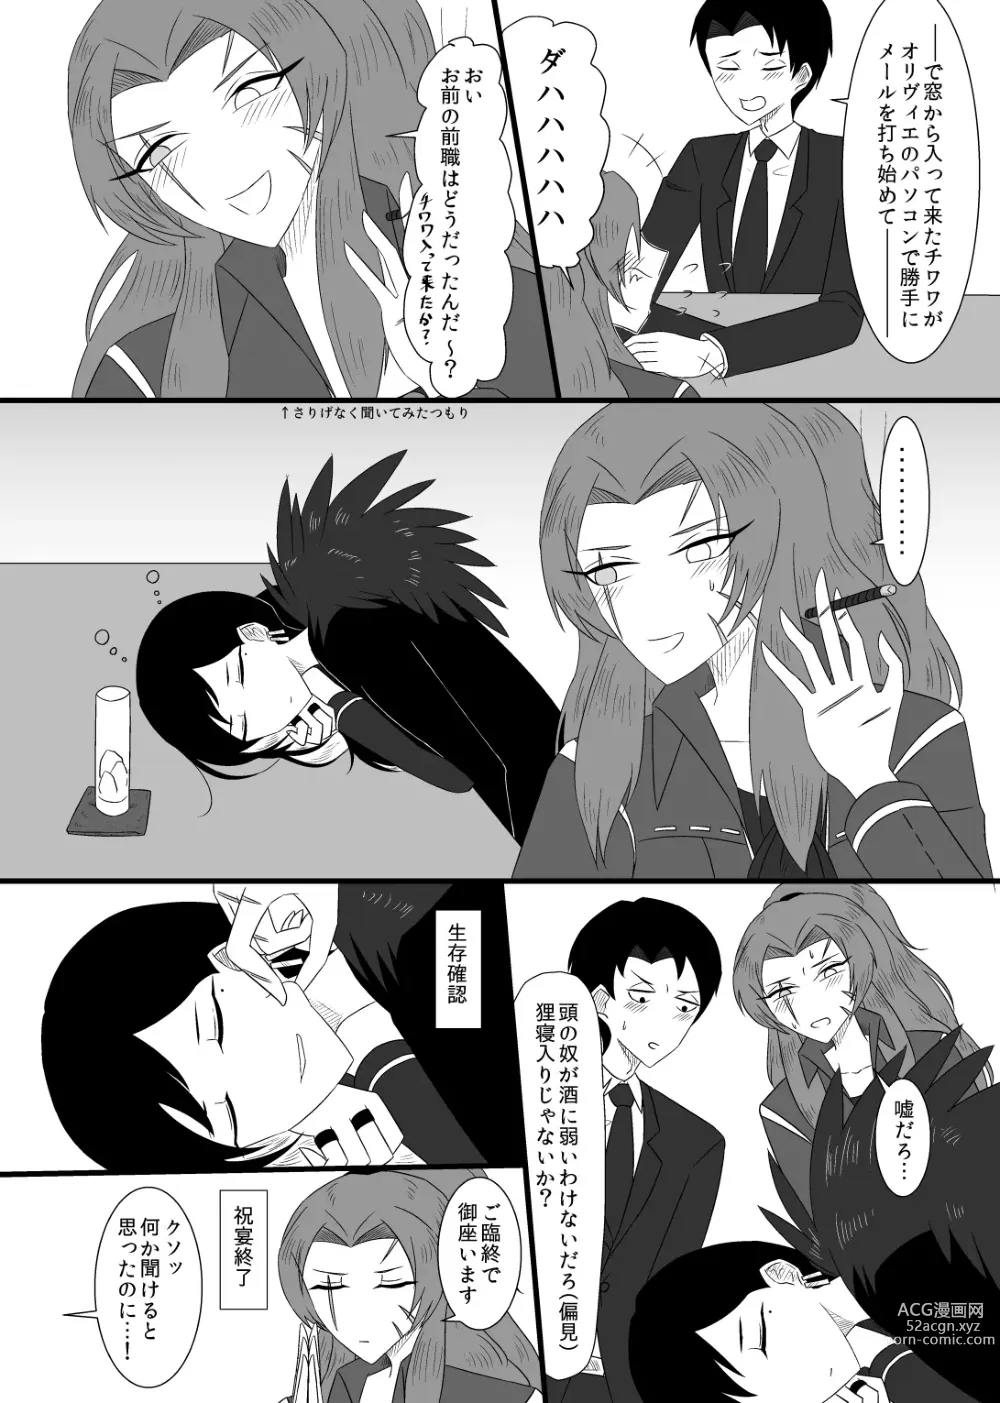 Page 6 of doujinshi 10/31 Ibento Shinkan